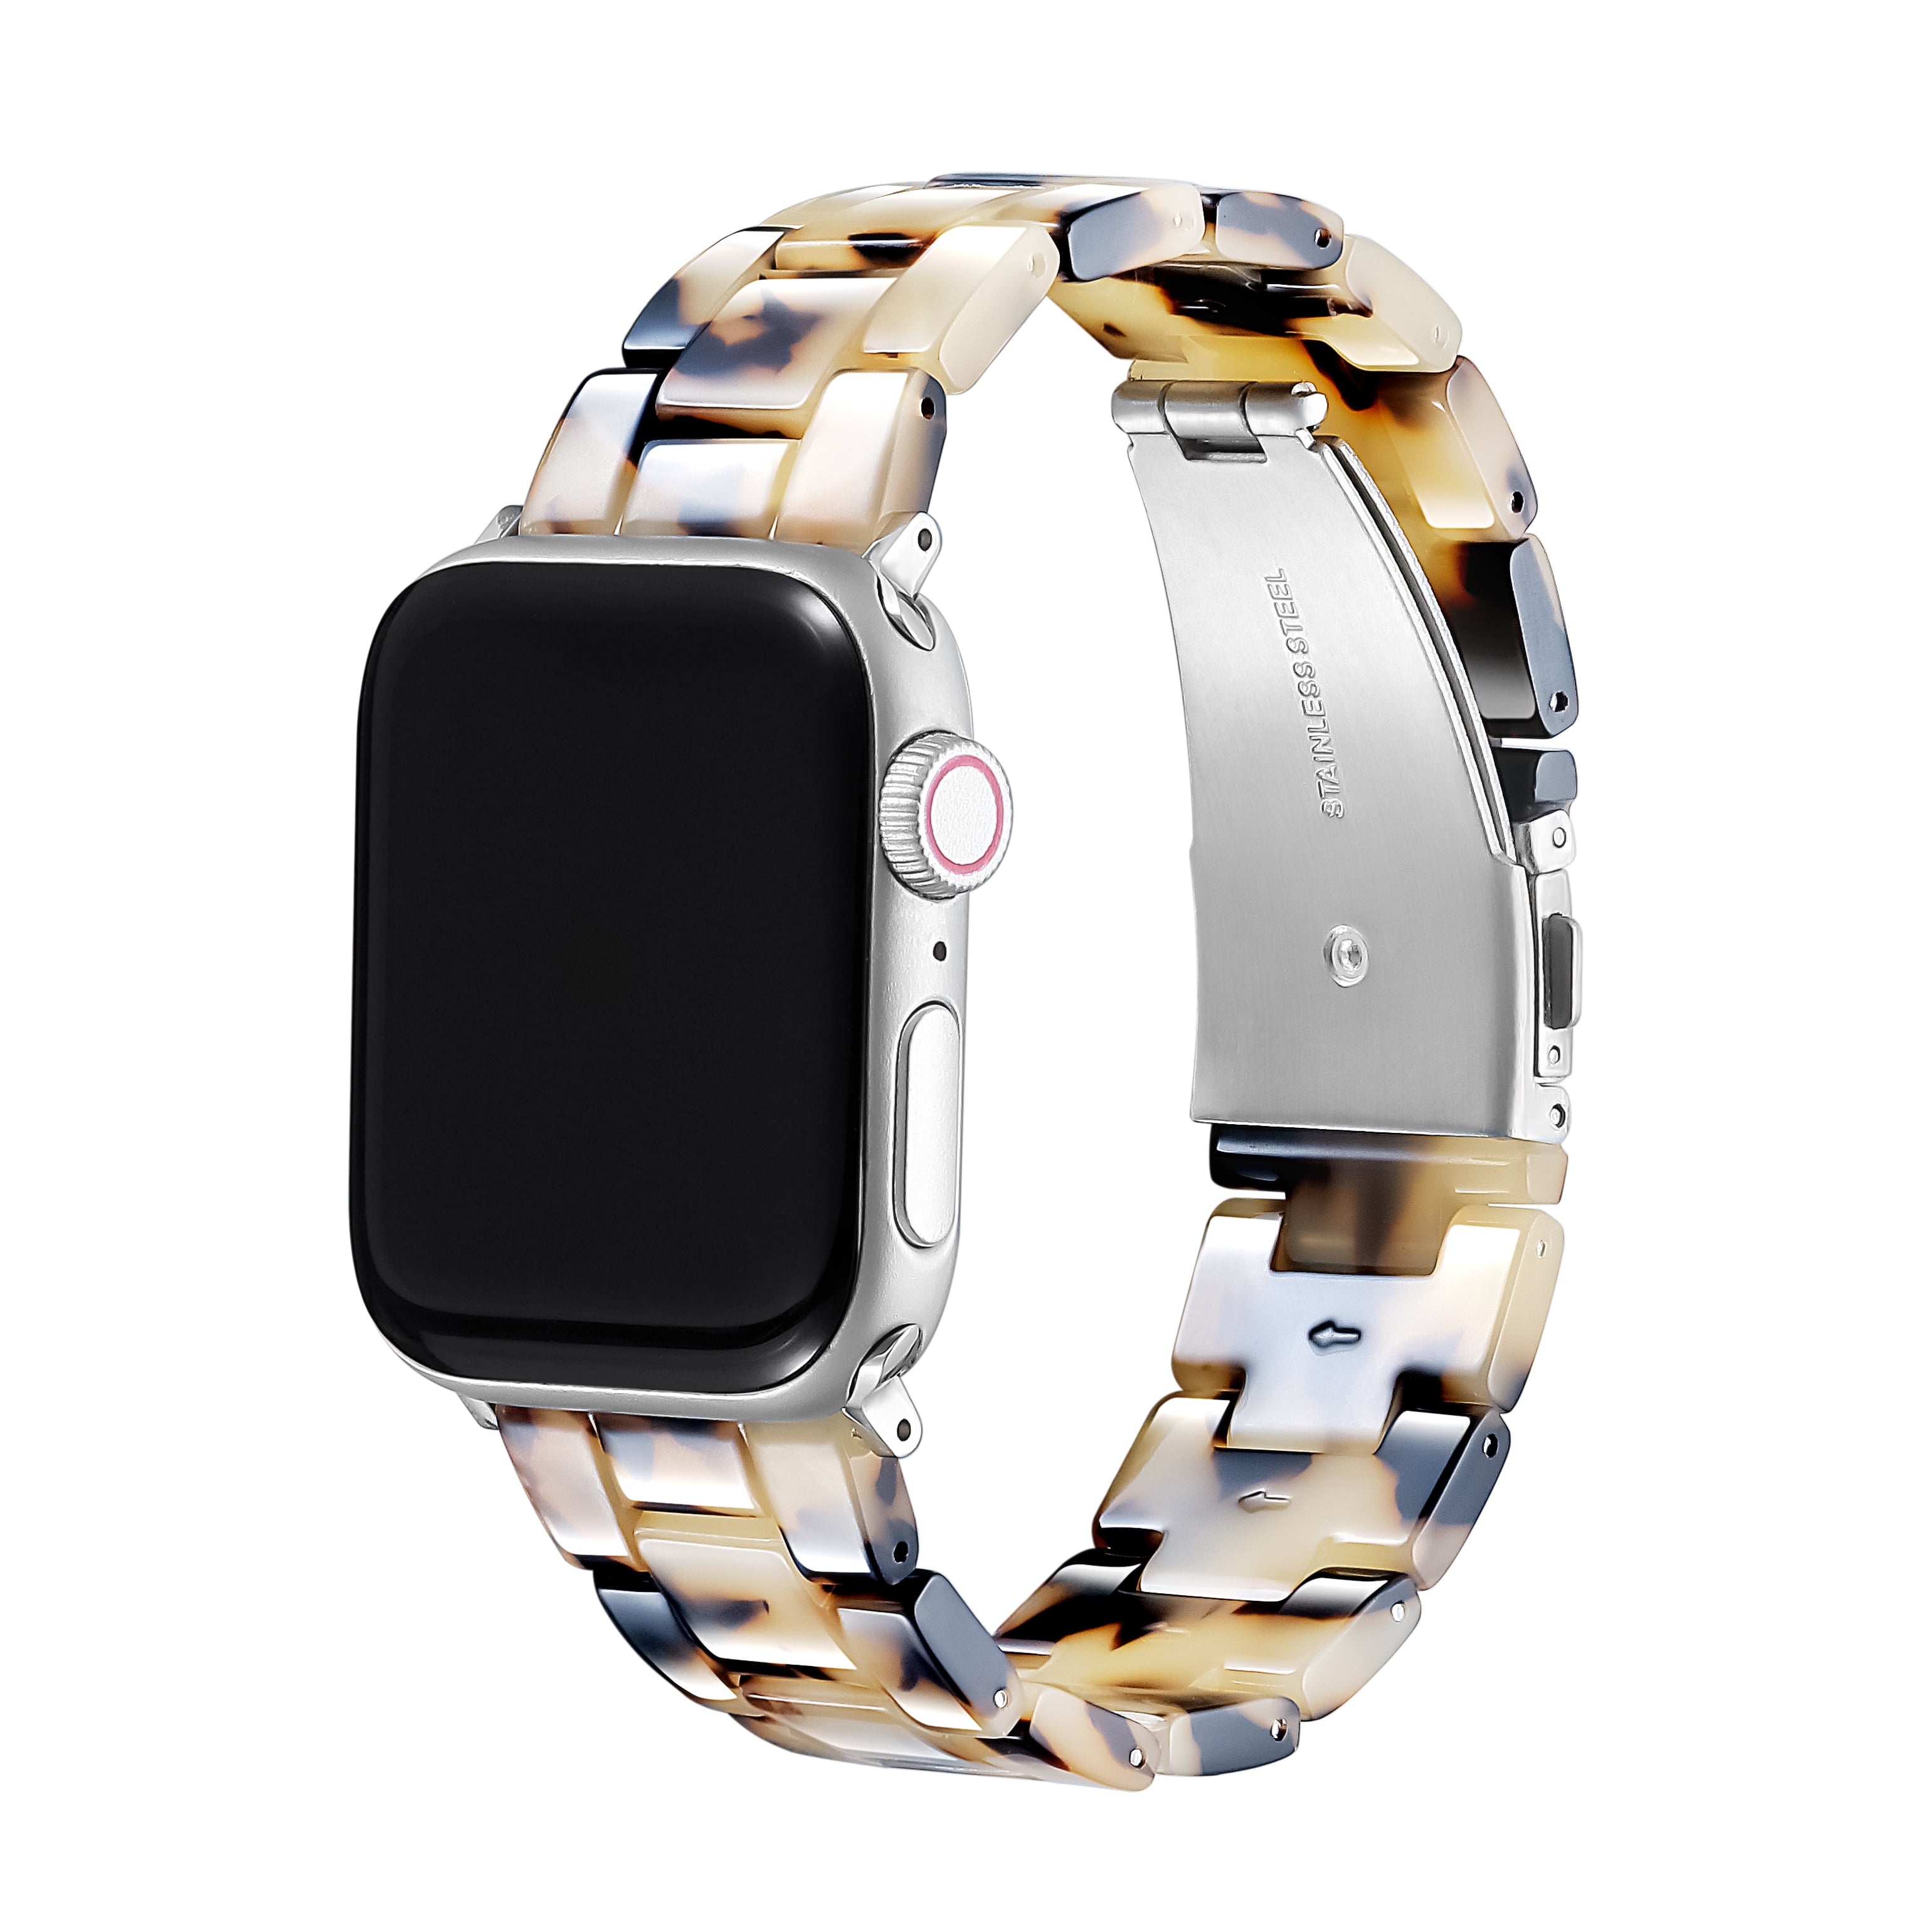 Schatzi Alice Check Apple Watch Band